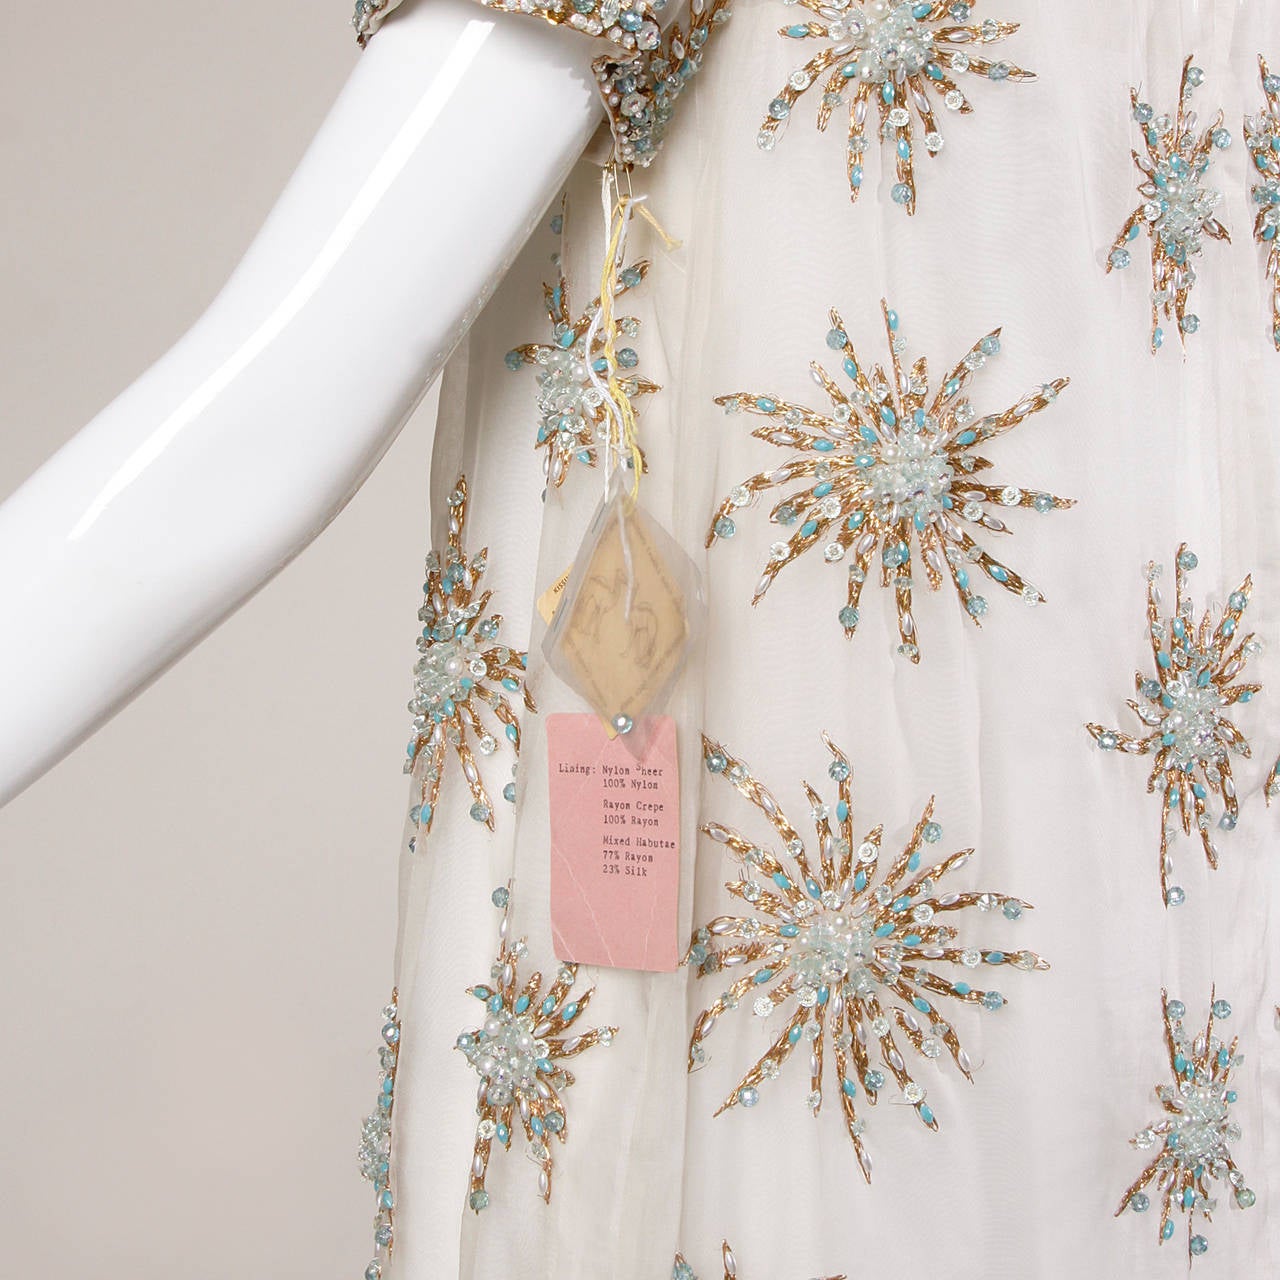 1960s Unworn Vintage Silk Embellished Shift Dress with Original Tags Attached 4